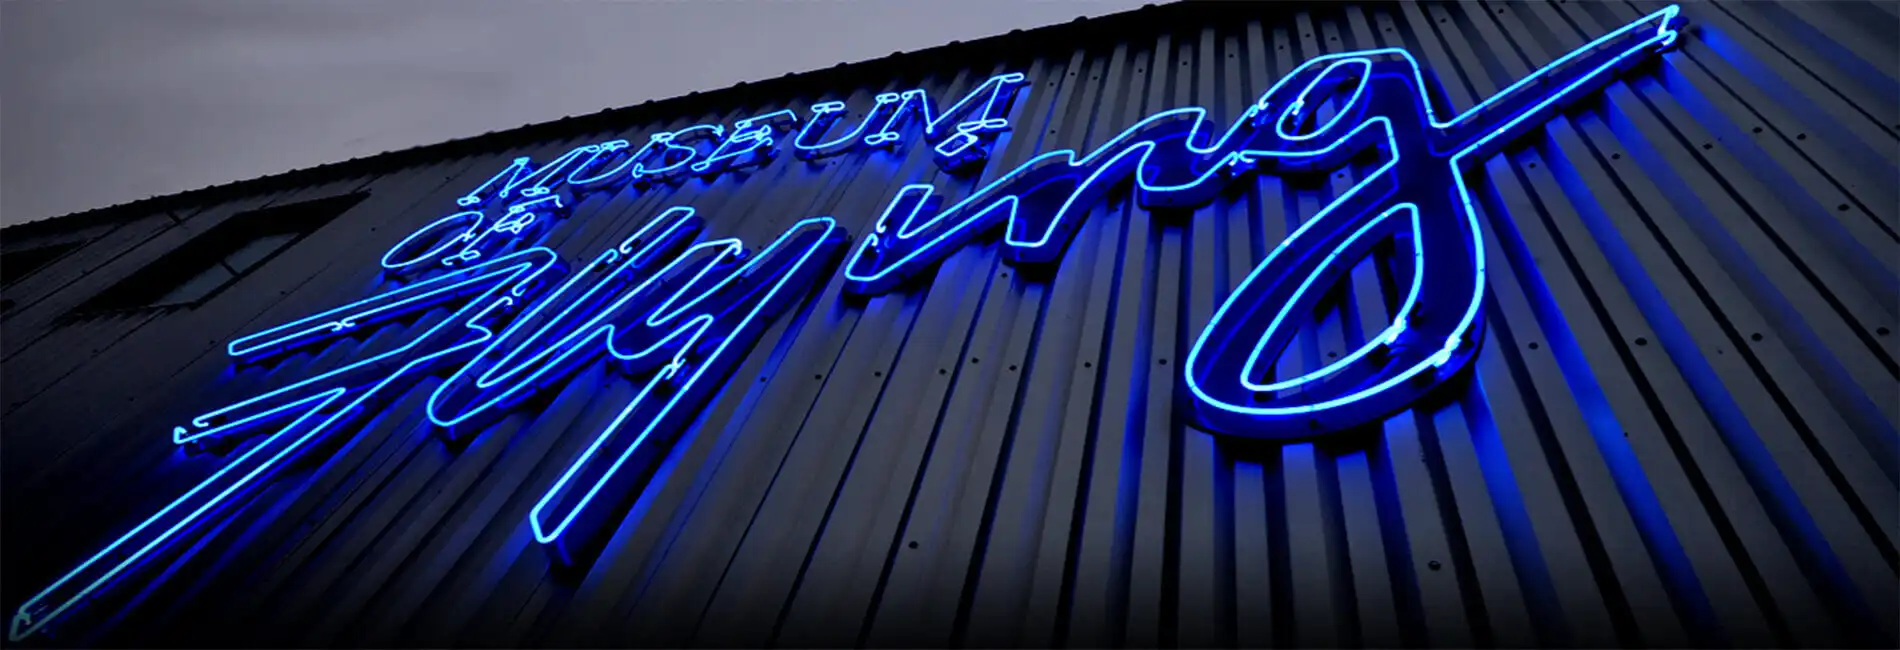 Museum of Flying Blue neon, Santa Monica, Califonia